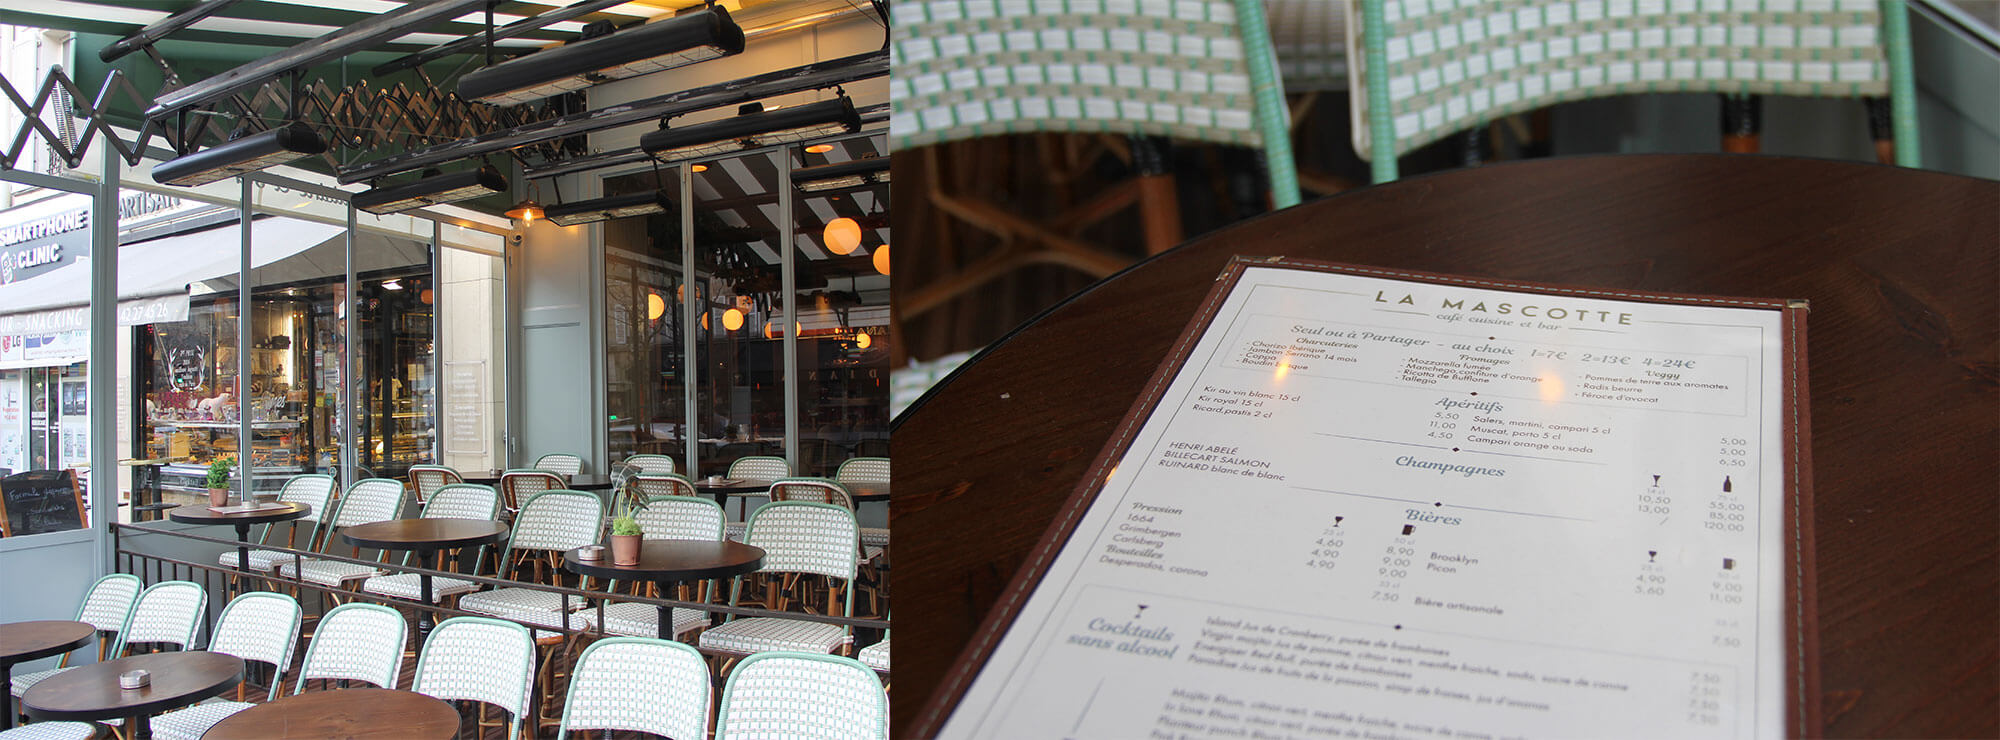 03.lamascotte terrasse logo cafe bar restaurant menu.jpg